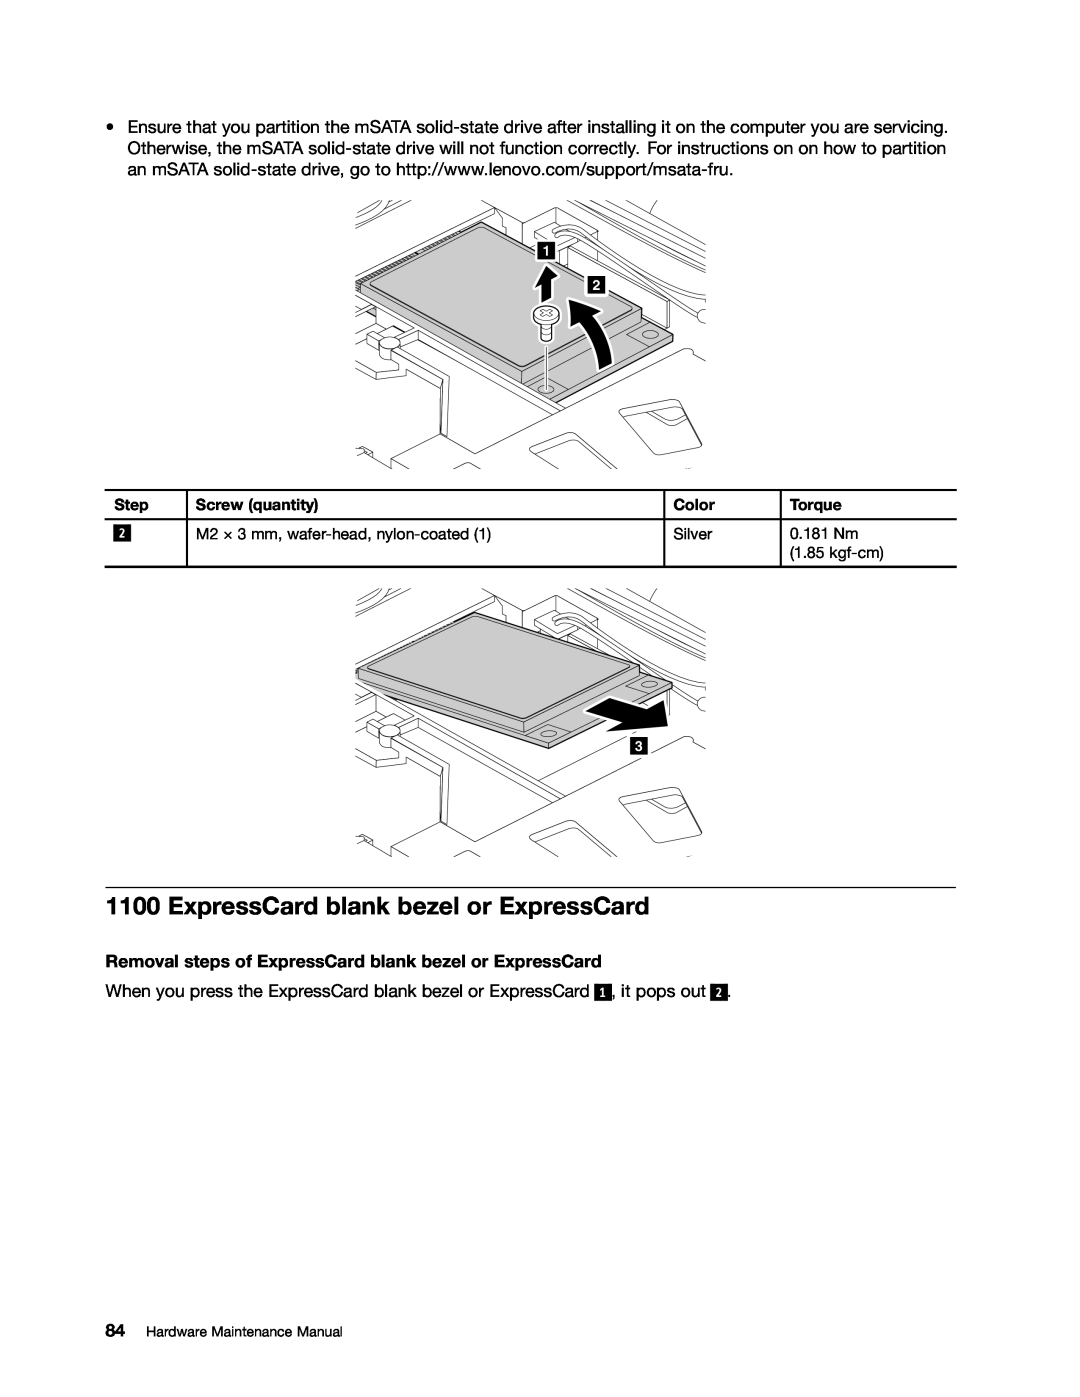 Lenovo W530, T530i manual Removal steps of ExpressCard blank bezel or ExpressCard, kgf-cm, Hardware Maintenance Manual 